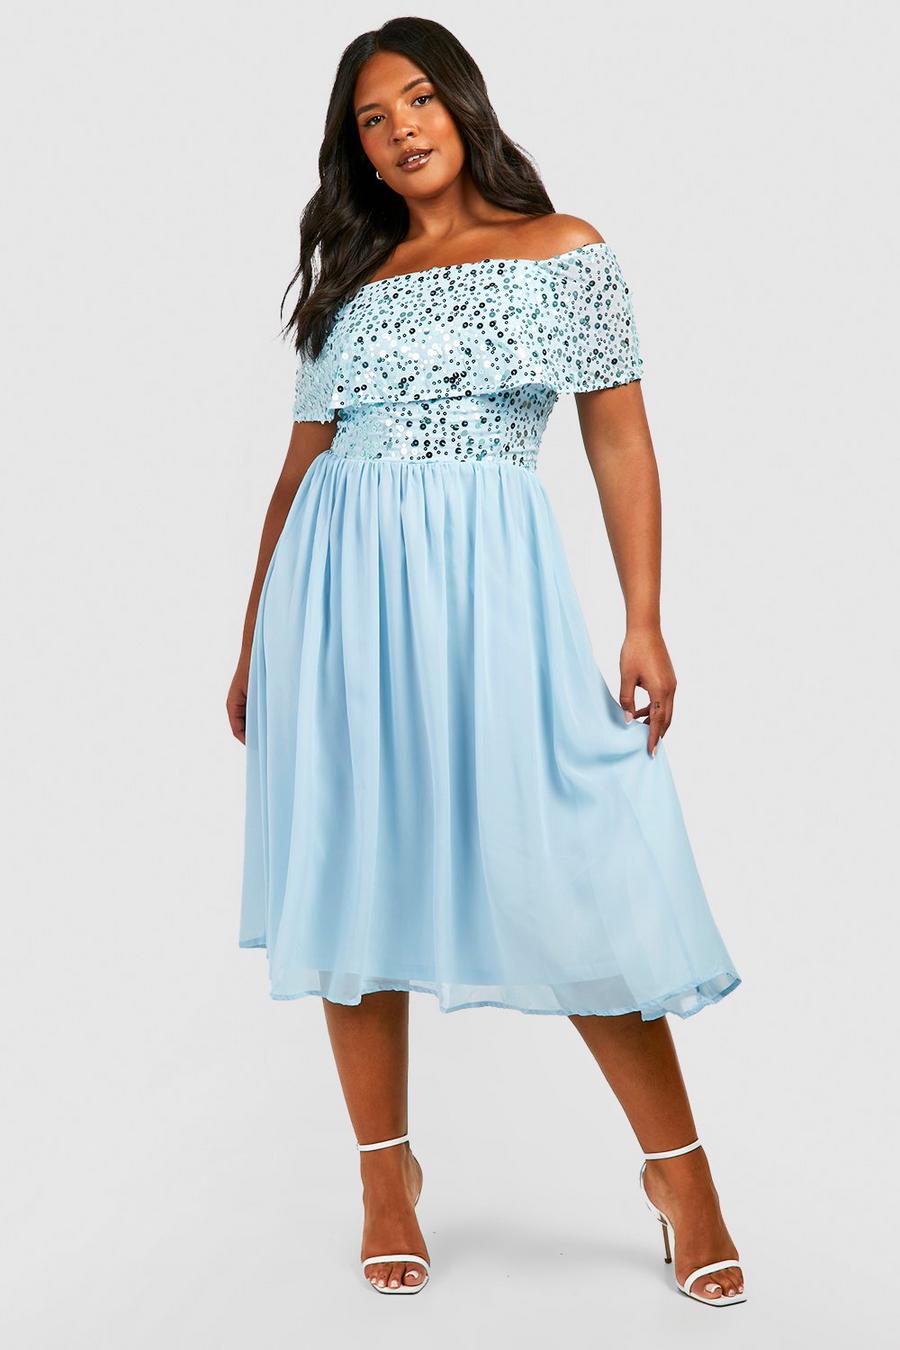 13+ Baby Blue Short Dress